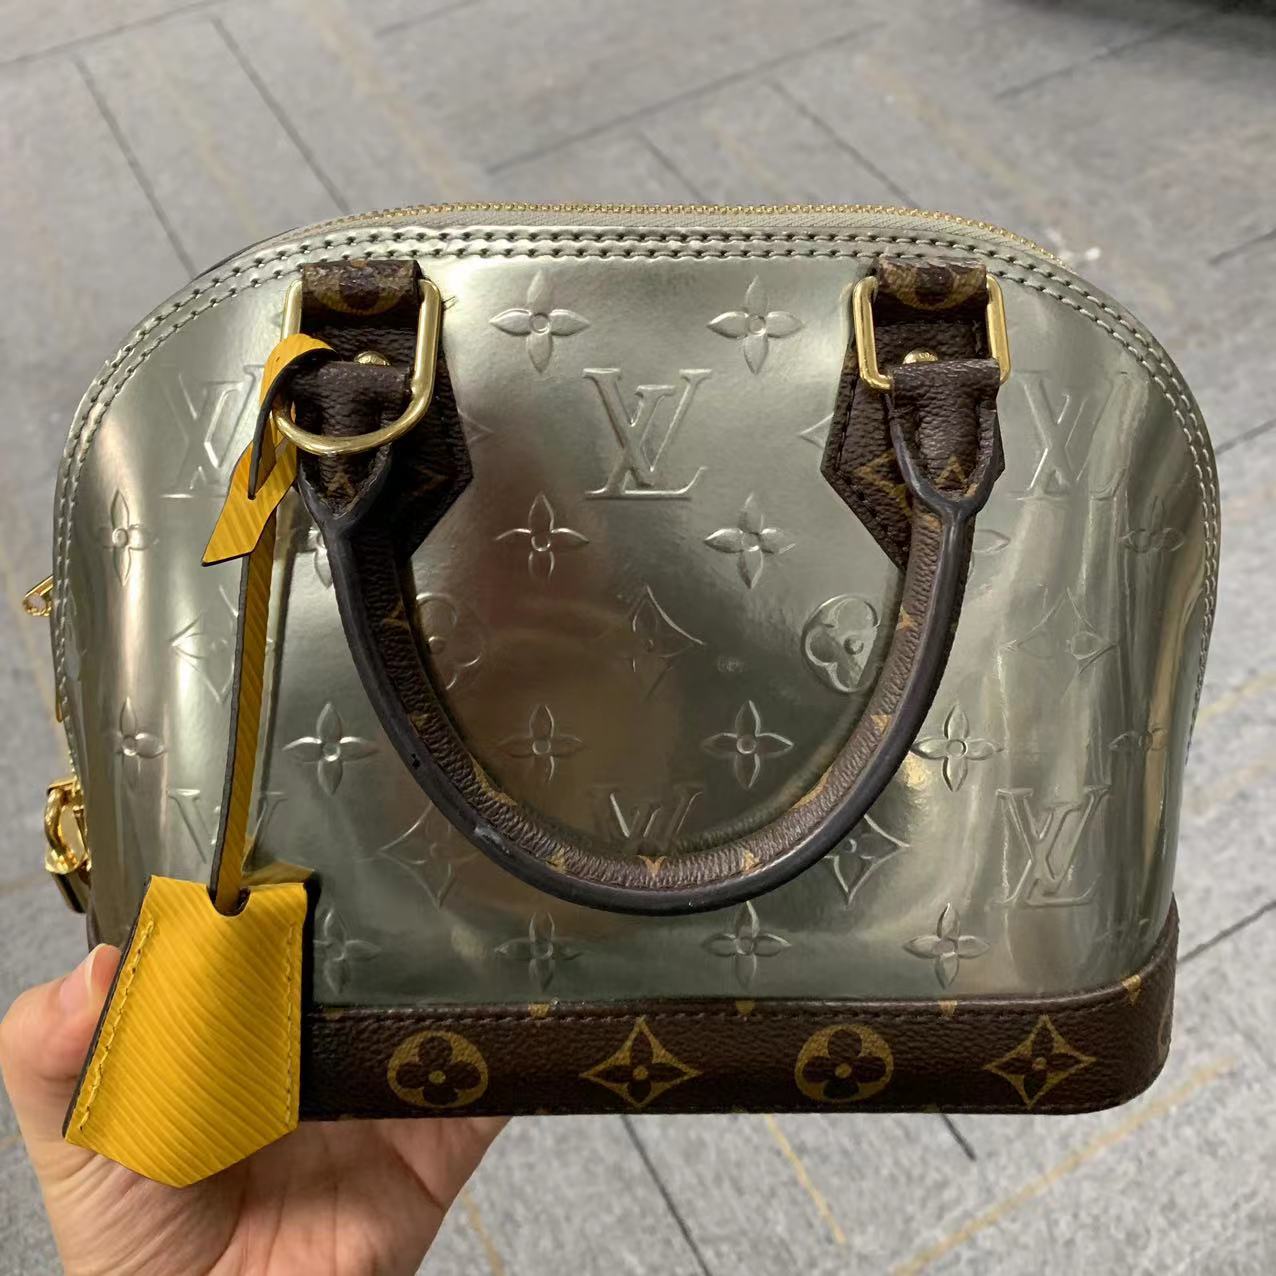 Alma BB patent leather handbag